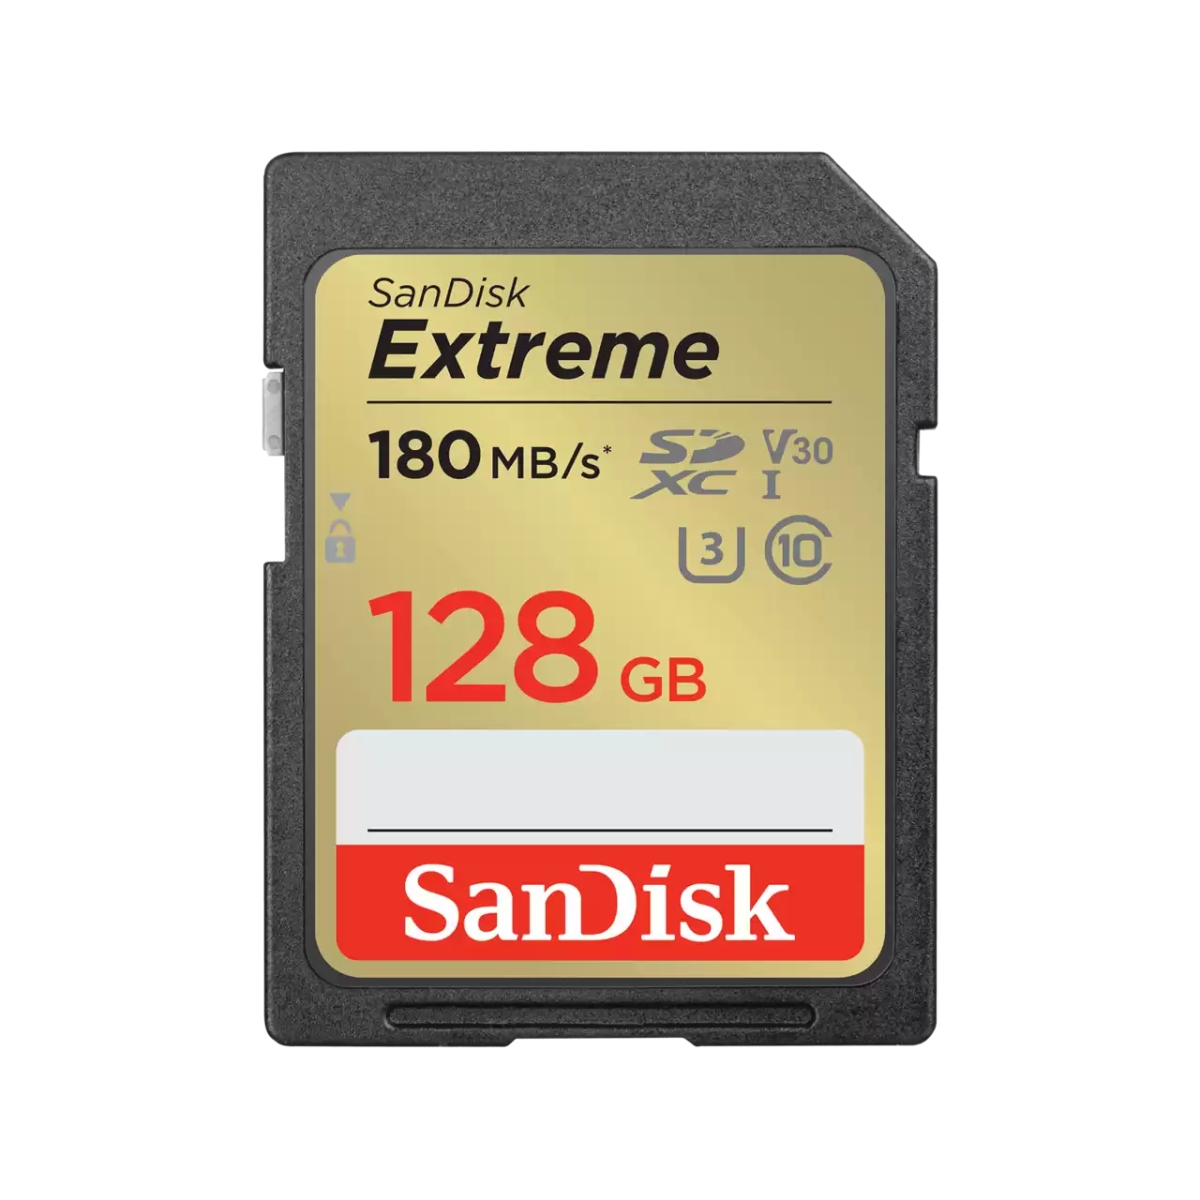 Obrázek SanDisk Extreme/SDXC/128GB/180MBps/UHS-I U3 / Class 10